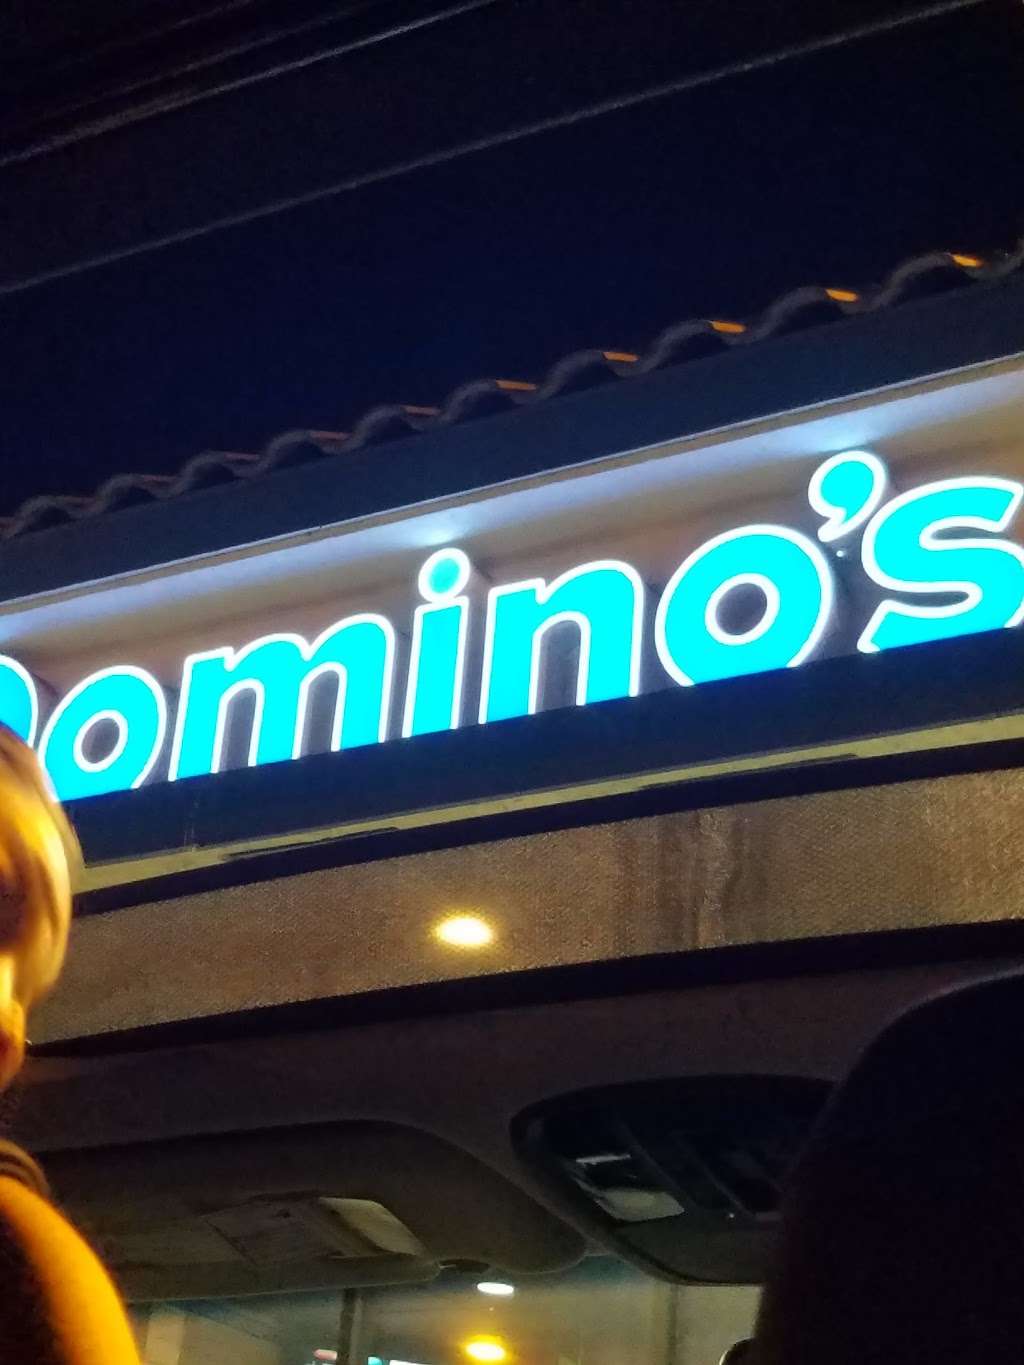 Dominos Pizza | 9448 Slauson Ave, Pico Rivera, CA 90660 | Phone: (562) 942-8303